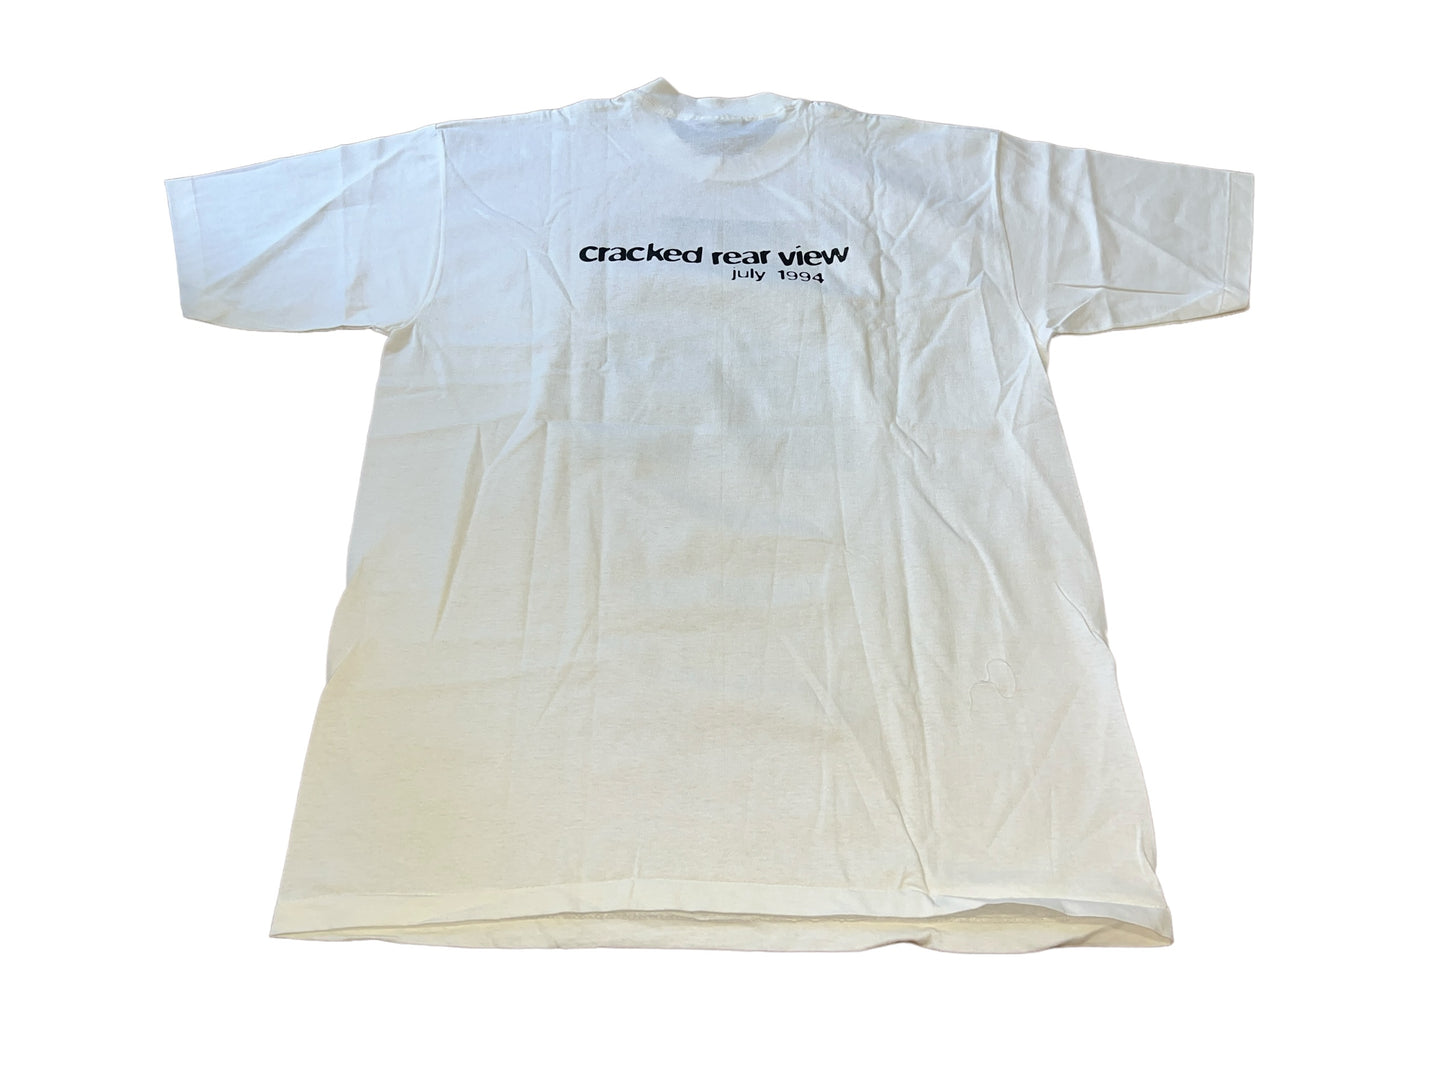 Vintage 1994 Hootie & The Blowfish T-Shirt